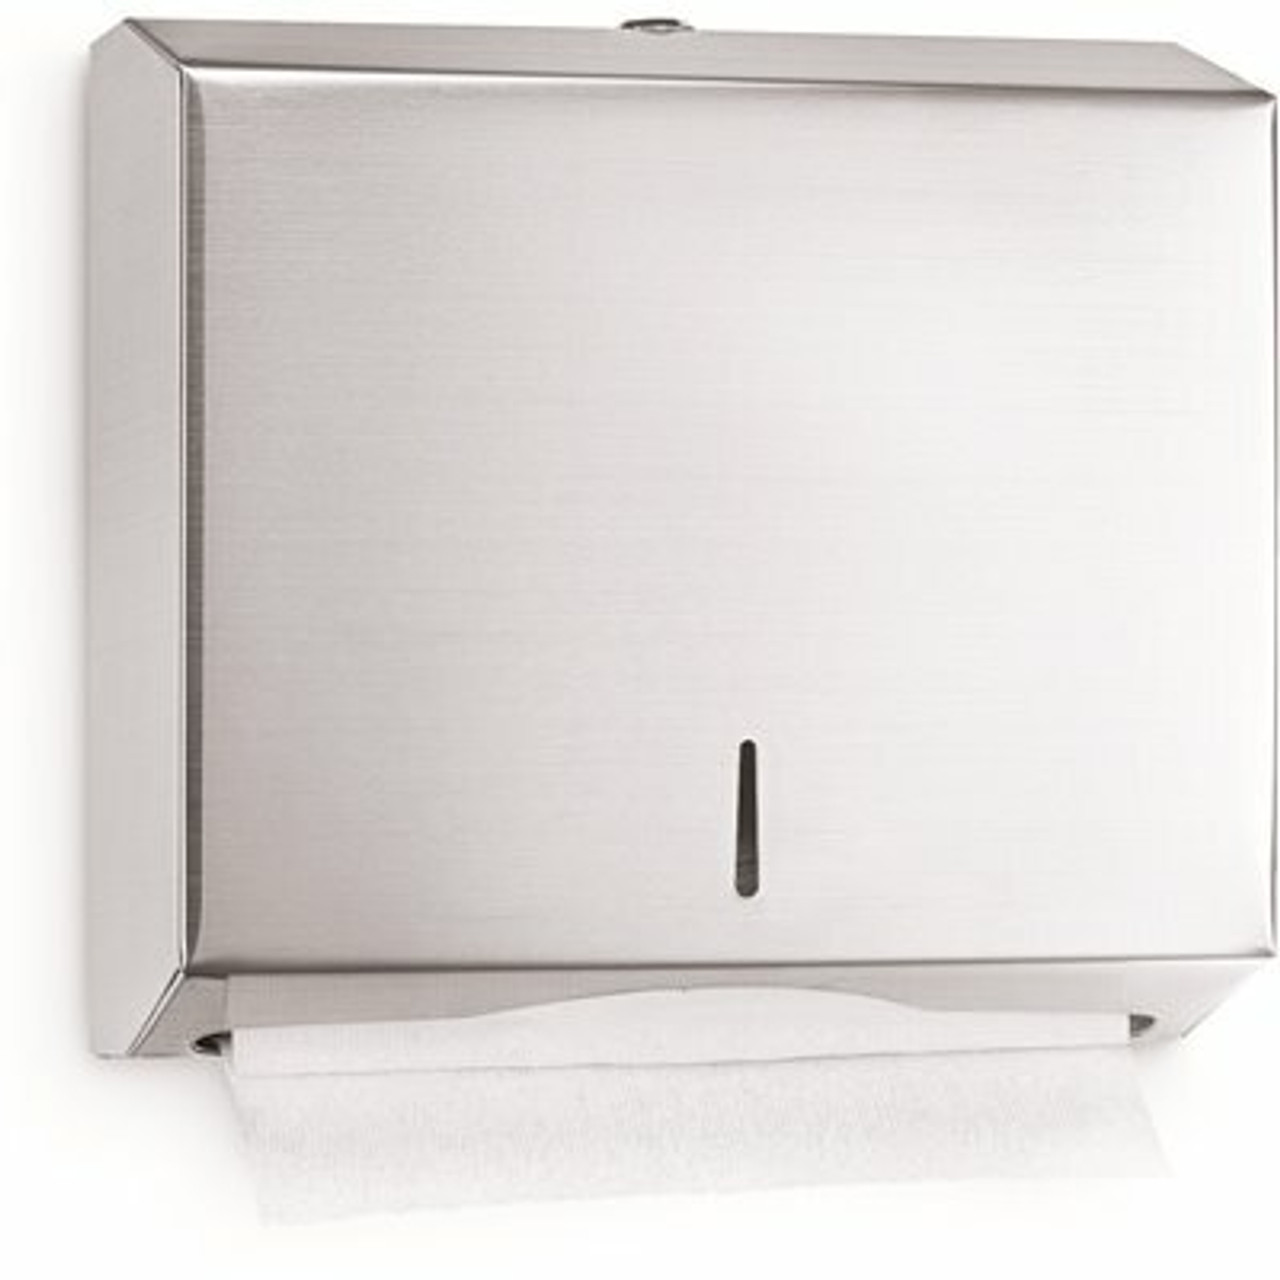 Alpine Industries Stainless Steel Multi-Fold/C-Fold Paper Towel Dispenser